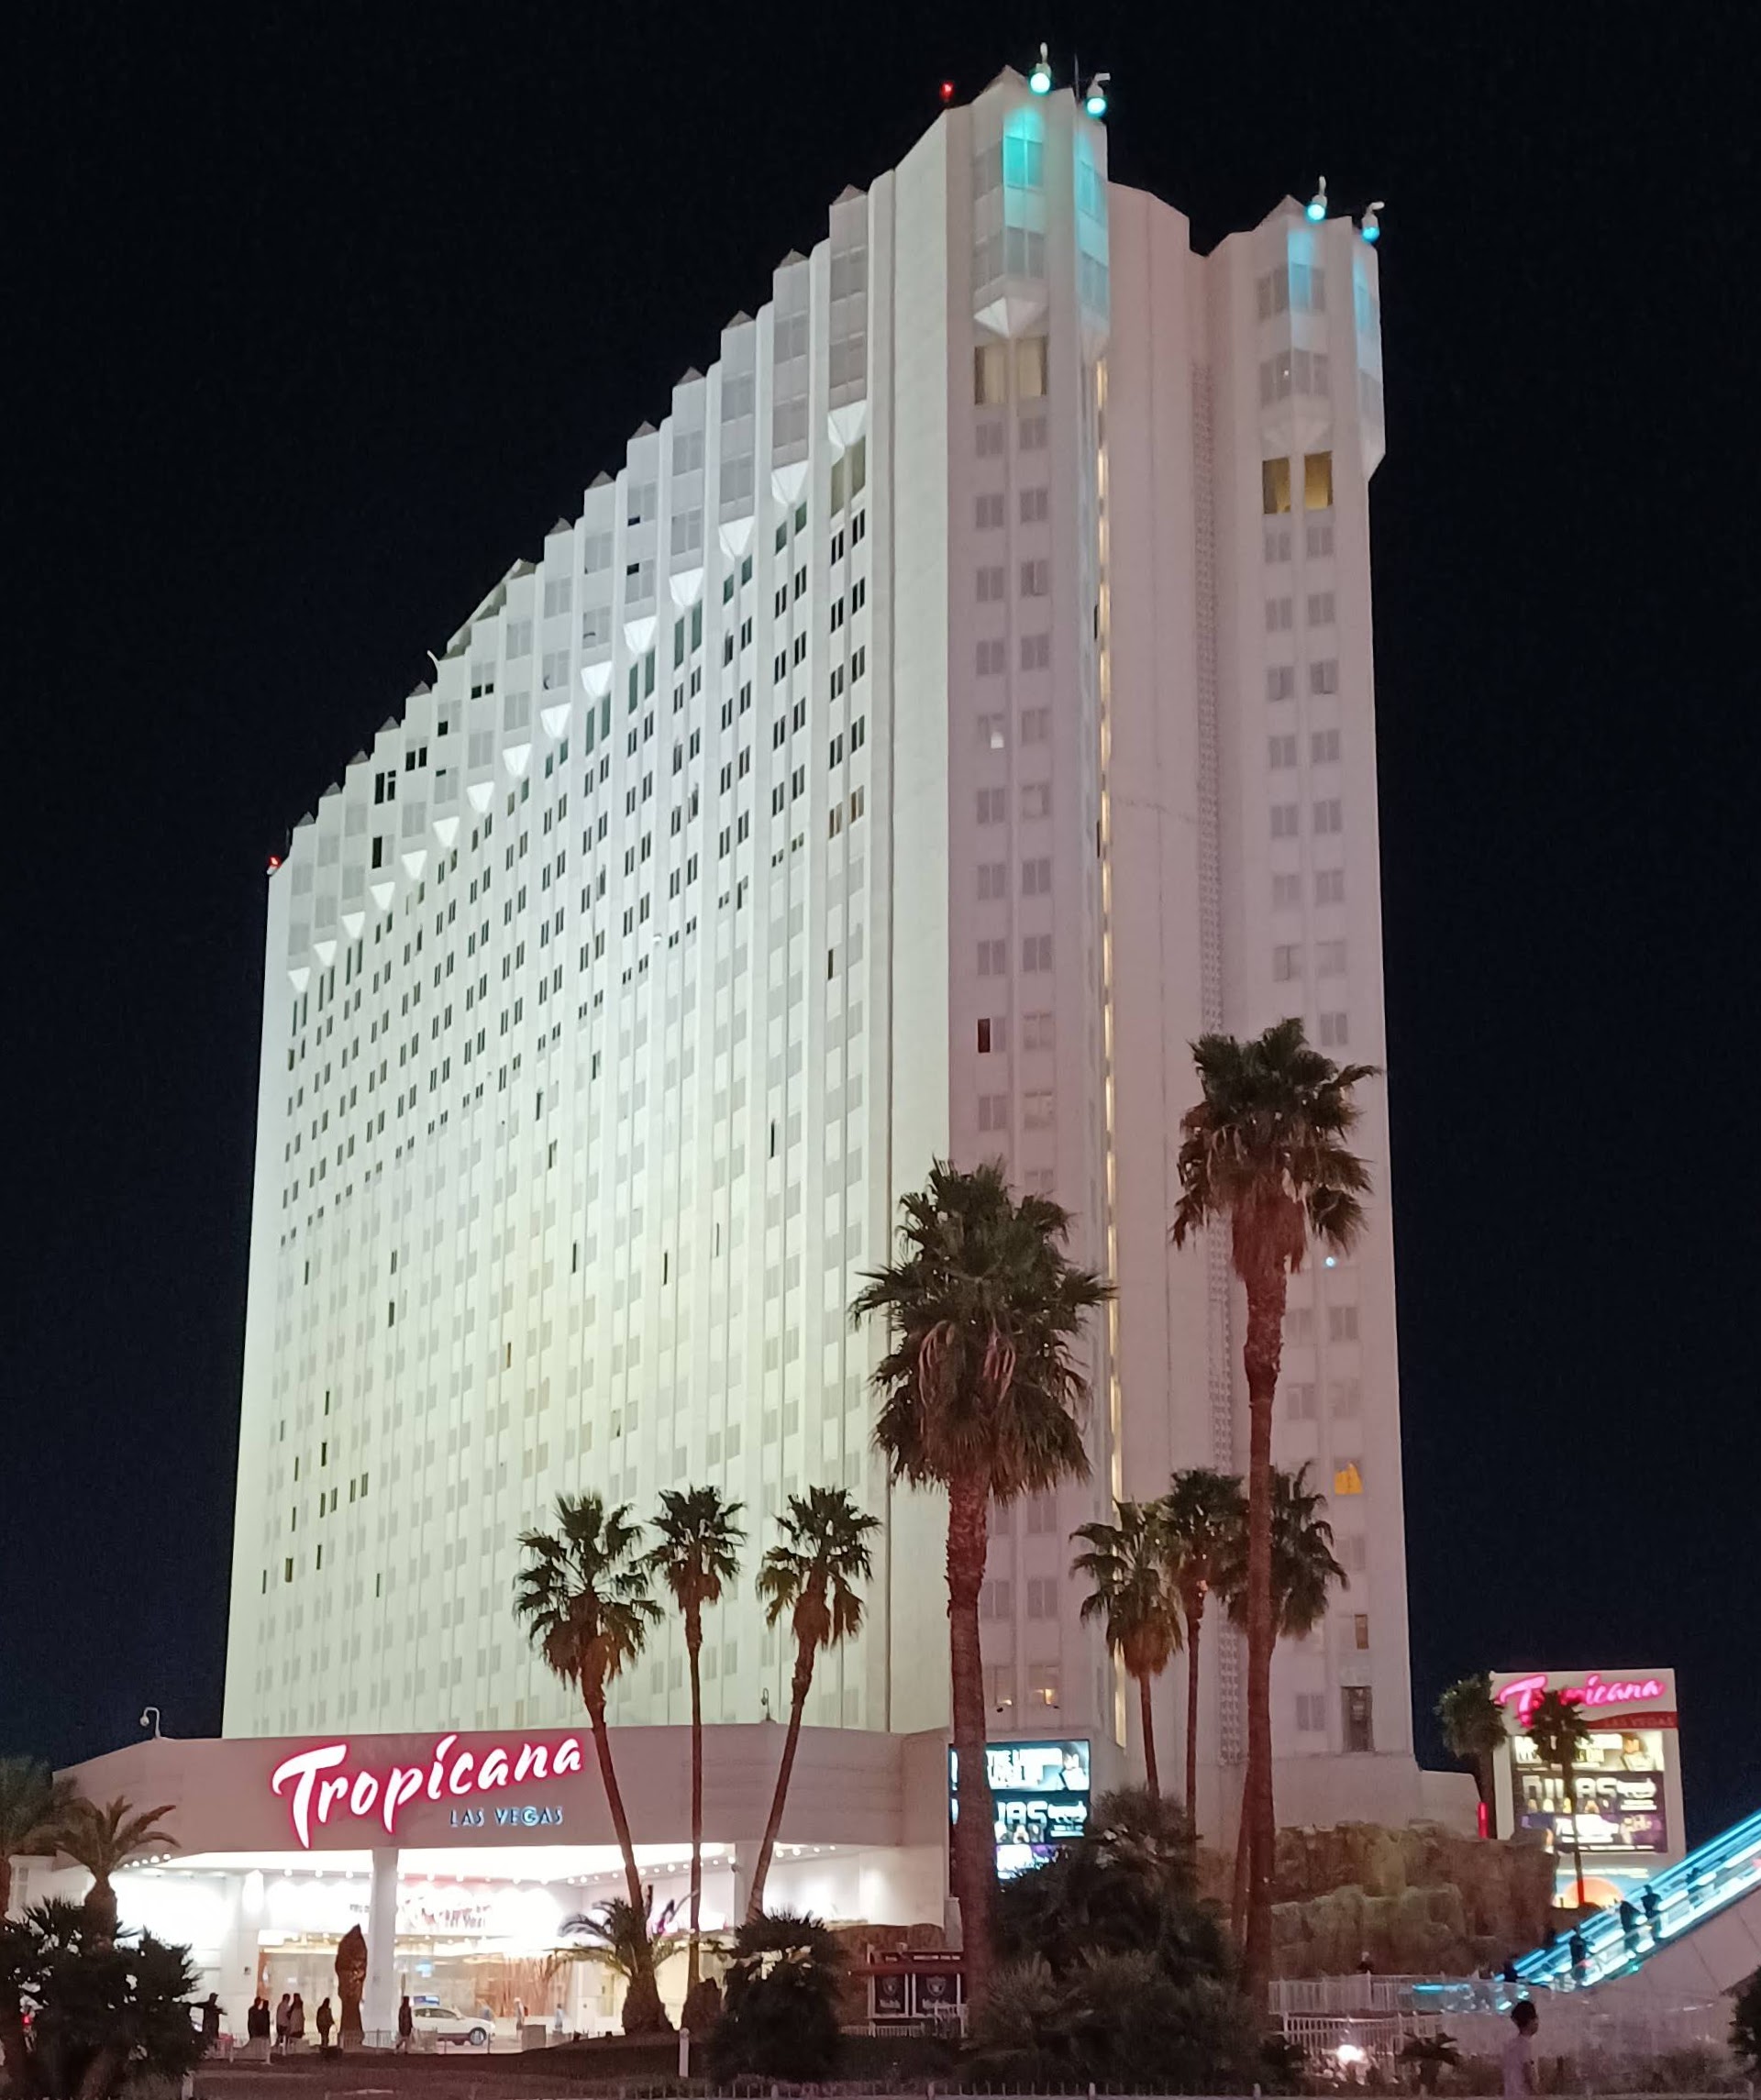 Tropicana Las Vegas - Wikipedia